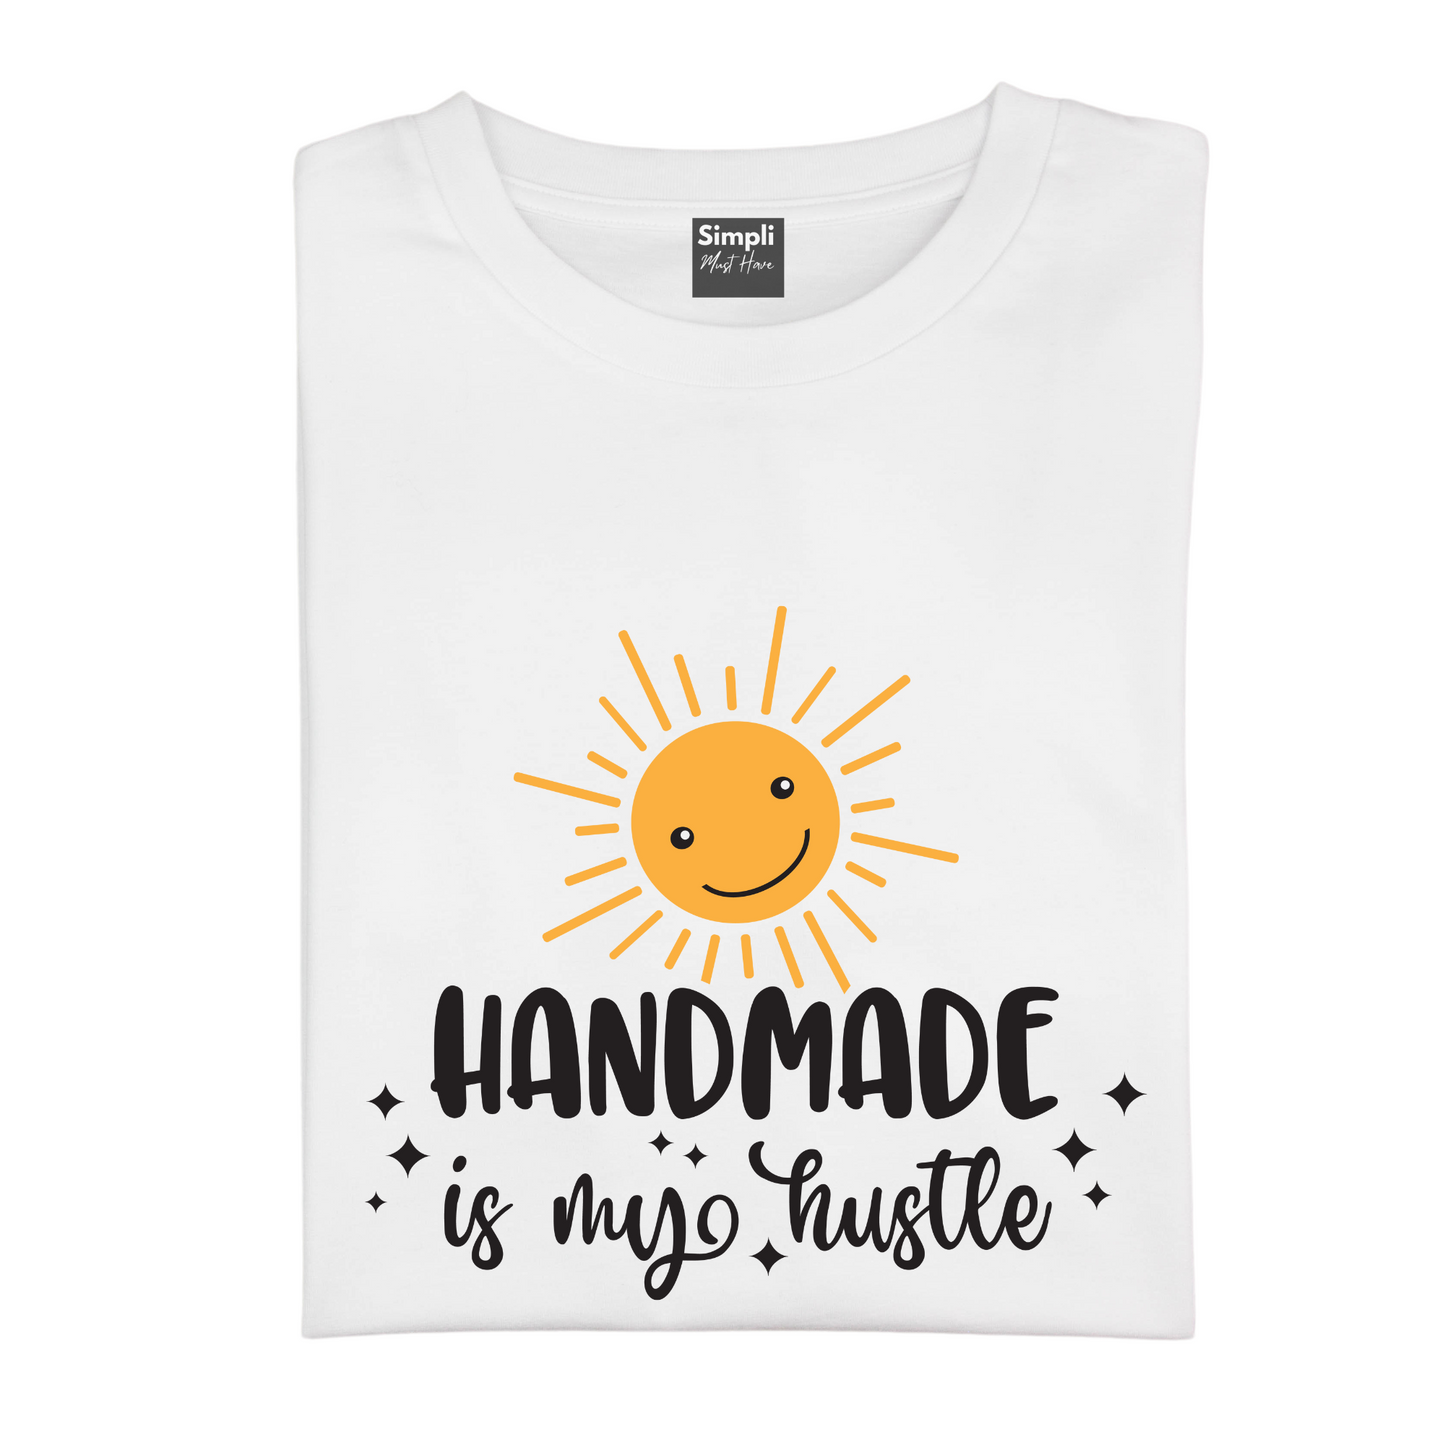 Handmade is my Hustle Tshirt